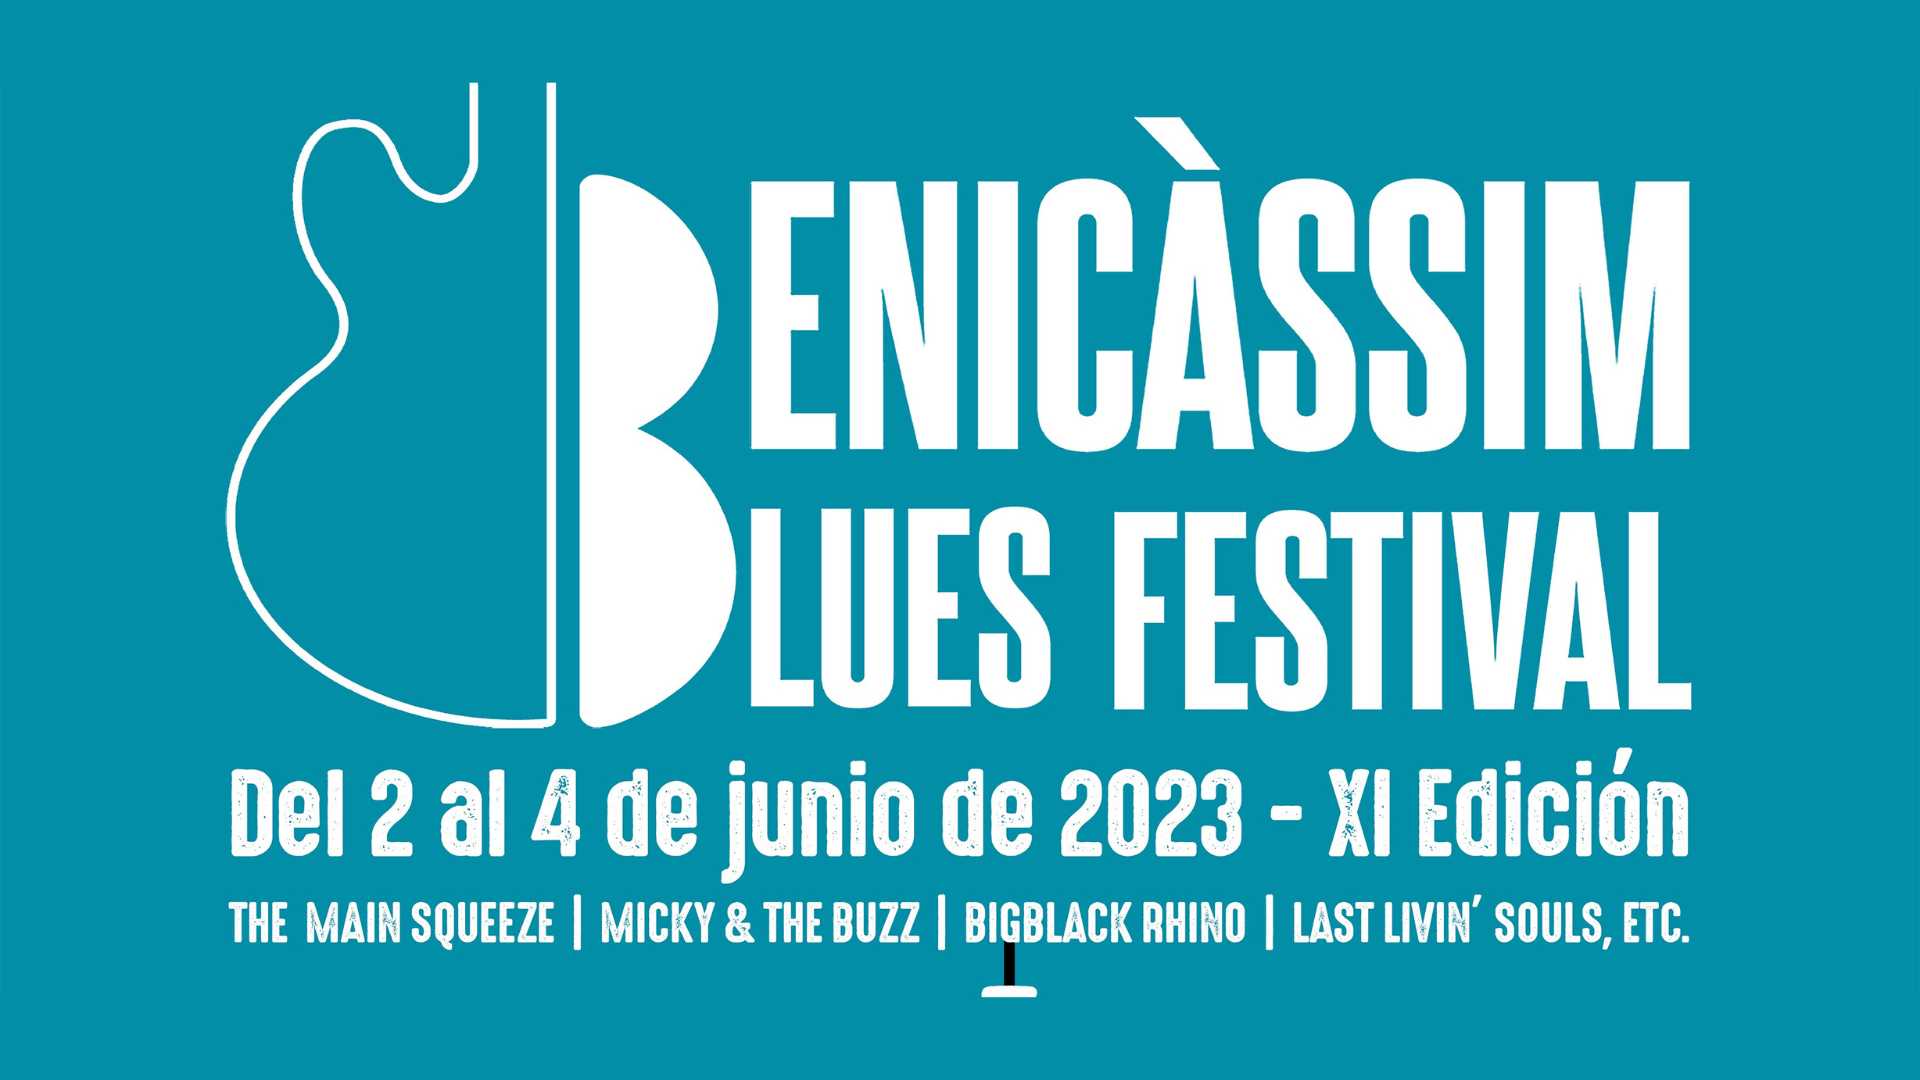 festival blues benicàssim 2023,